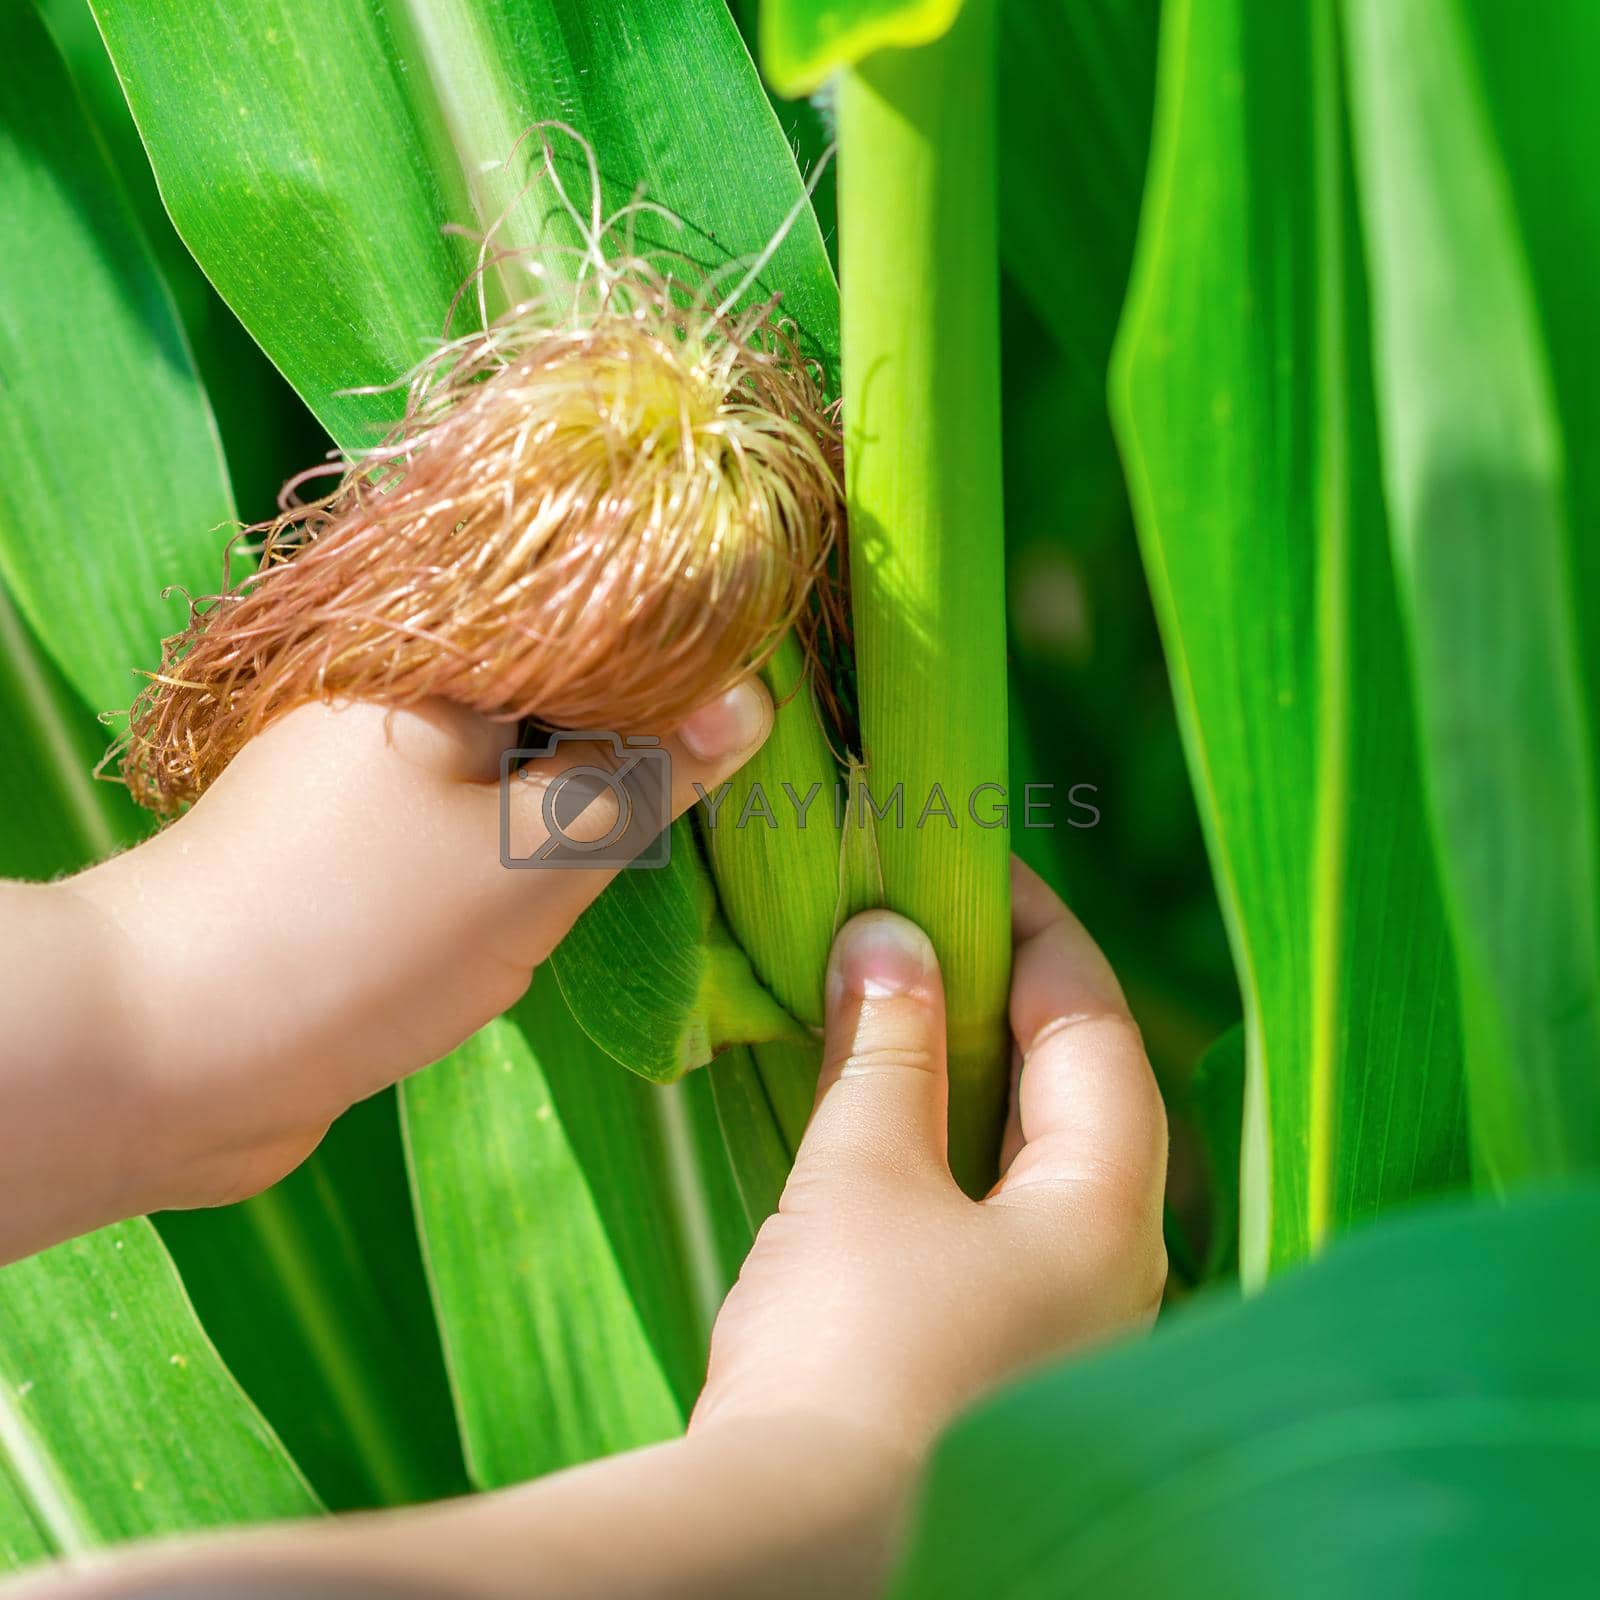 Royalty free image of Cob of corn in hands of little child by okskukuruza